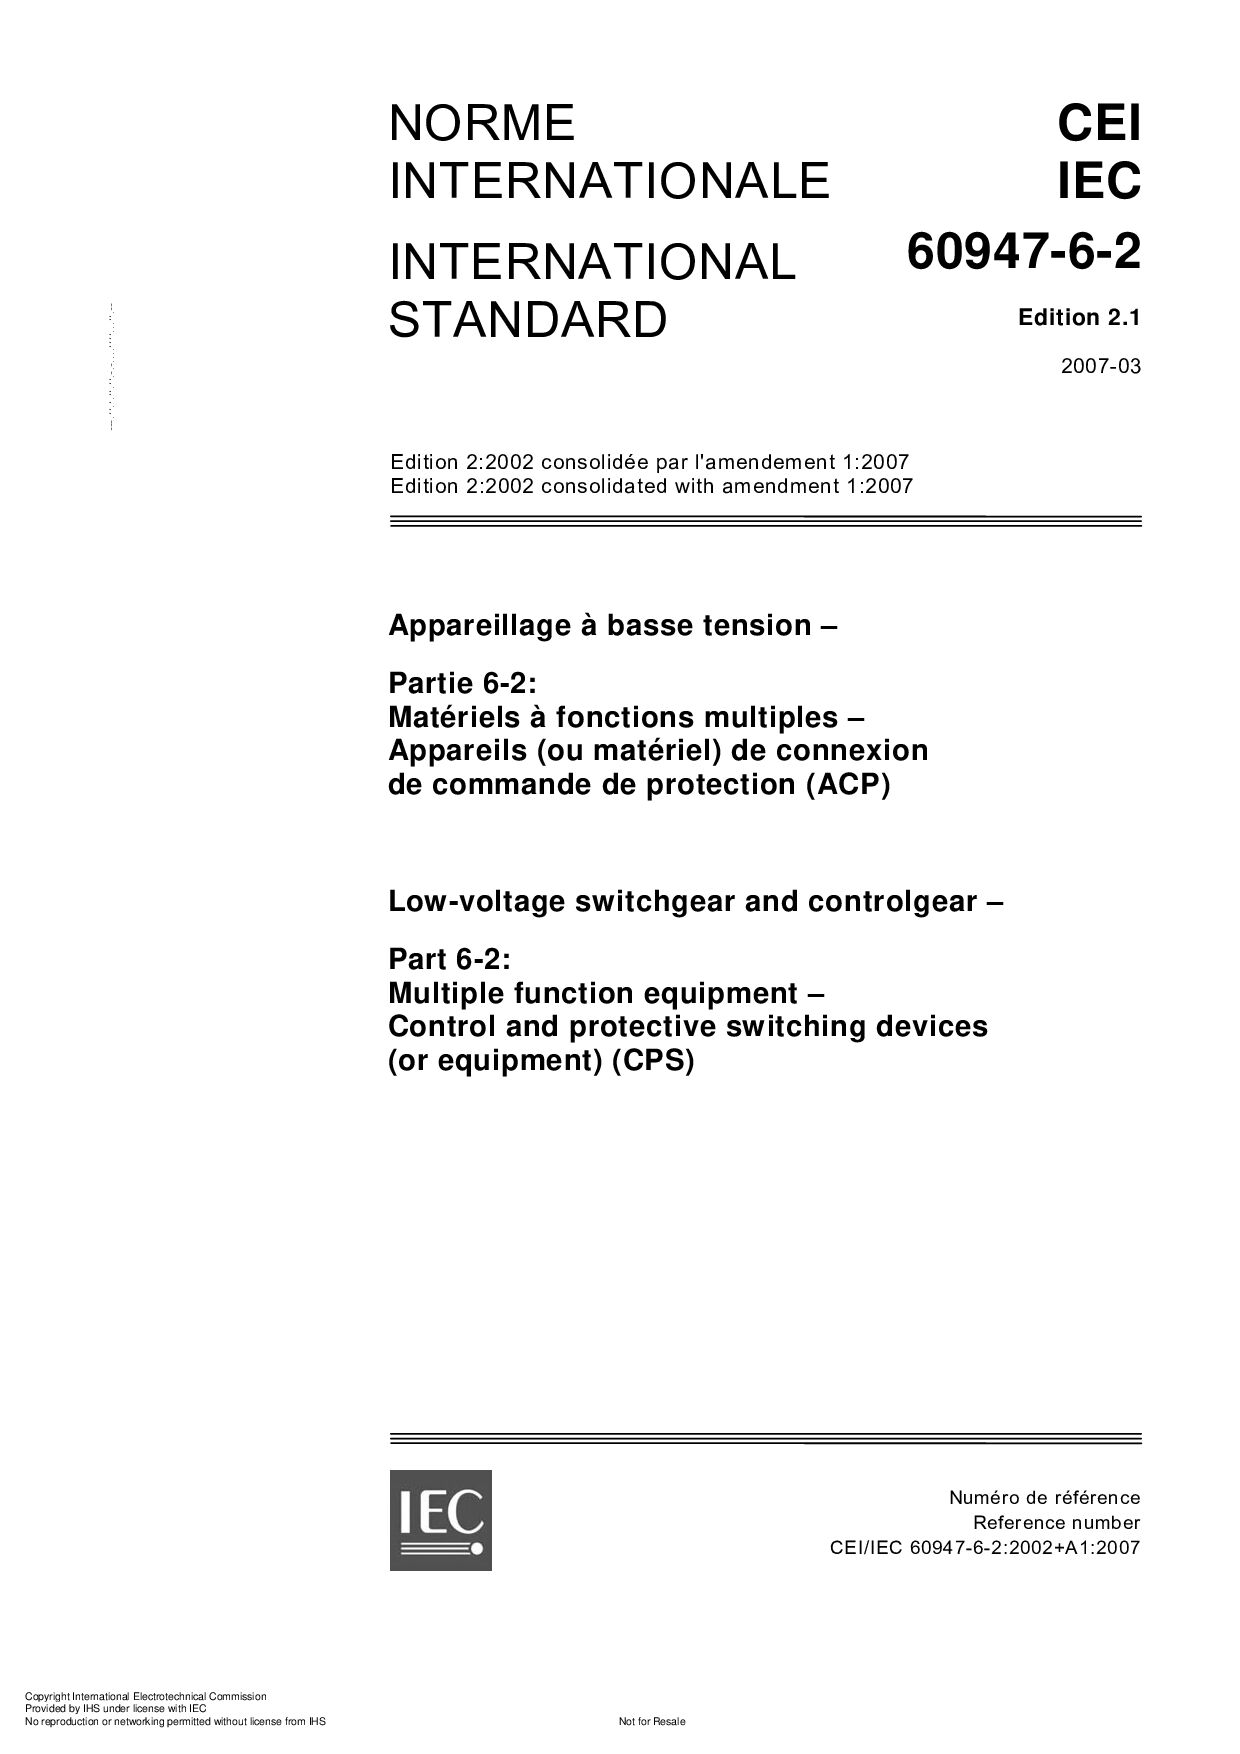 IEC 60947-6-2 Edition 2.1-2007